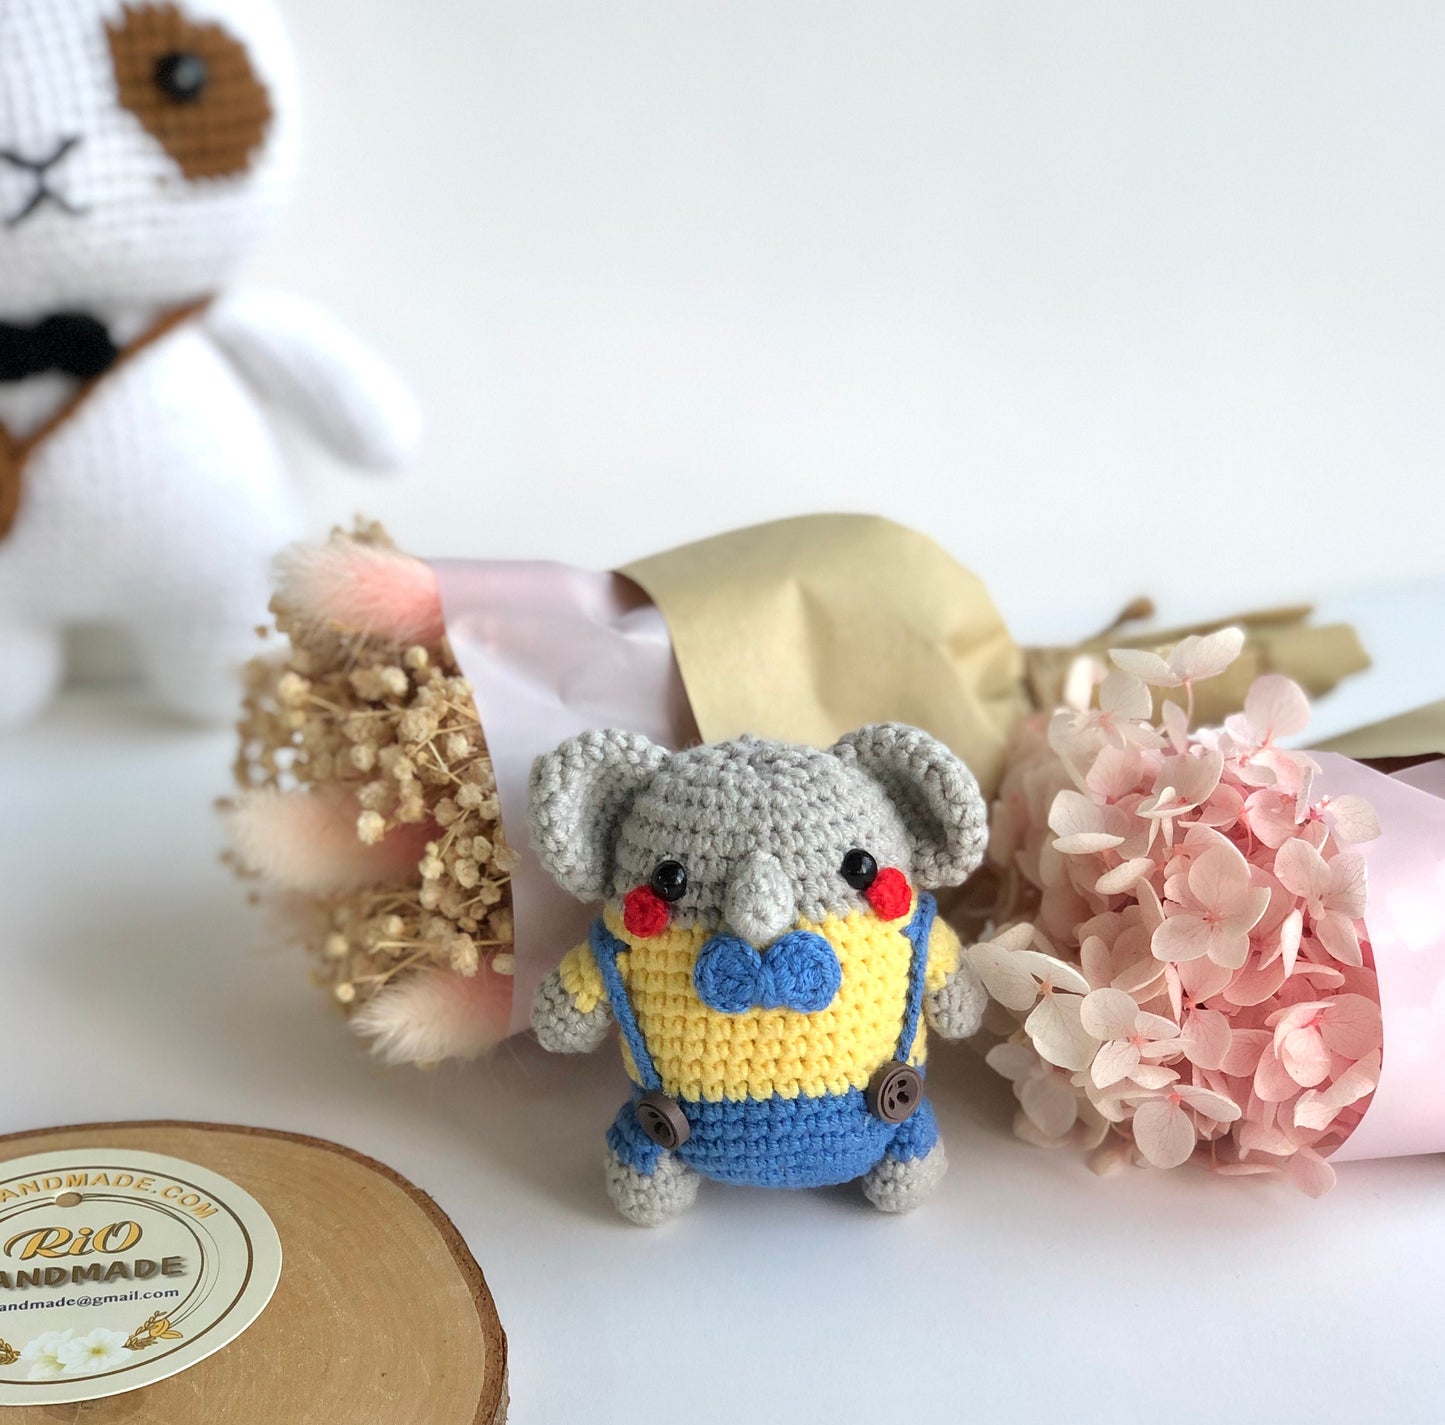 Handmade elephant keychain, car rearview mirror charm crochet amigurumi koala, elephant plushie toy, gift, car hanging accessory